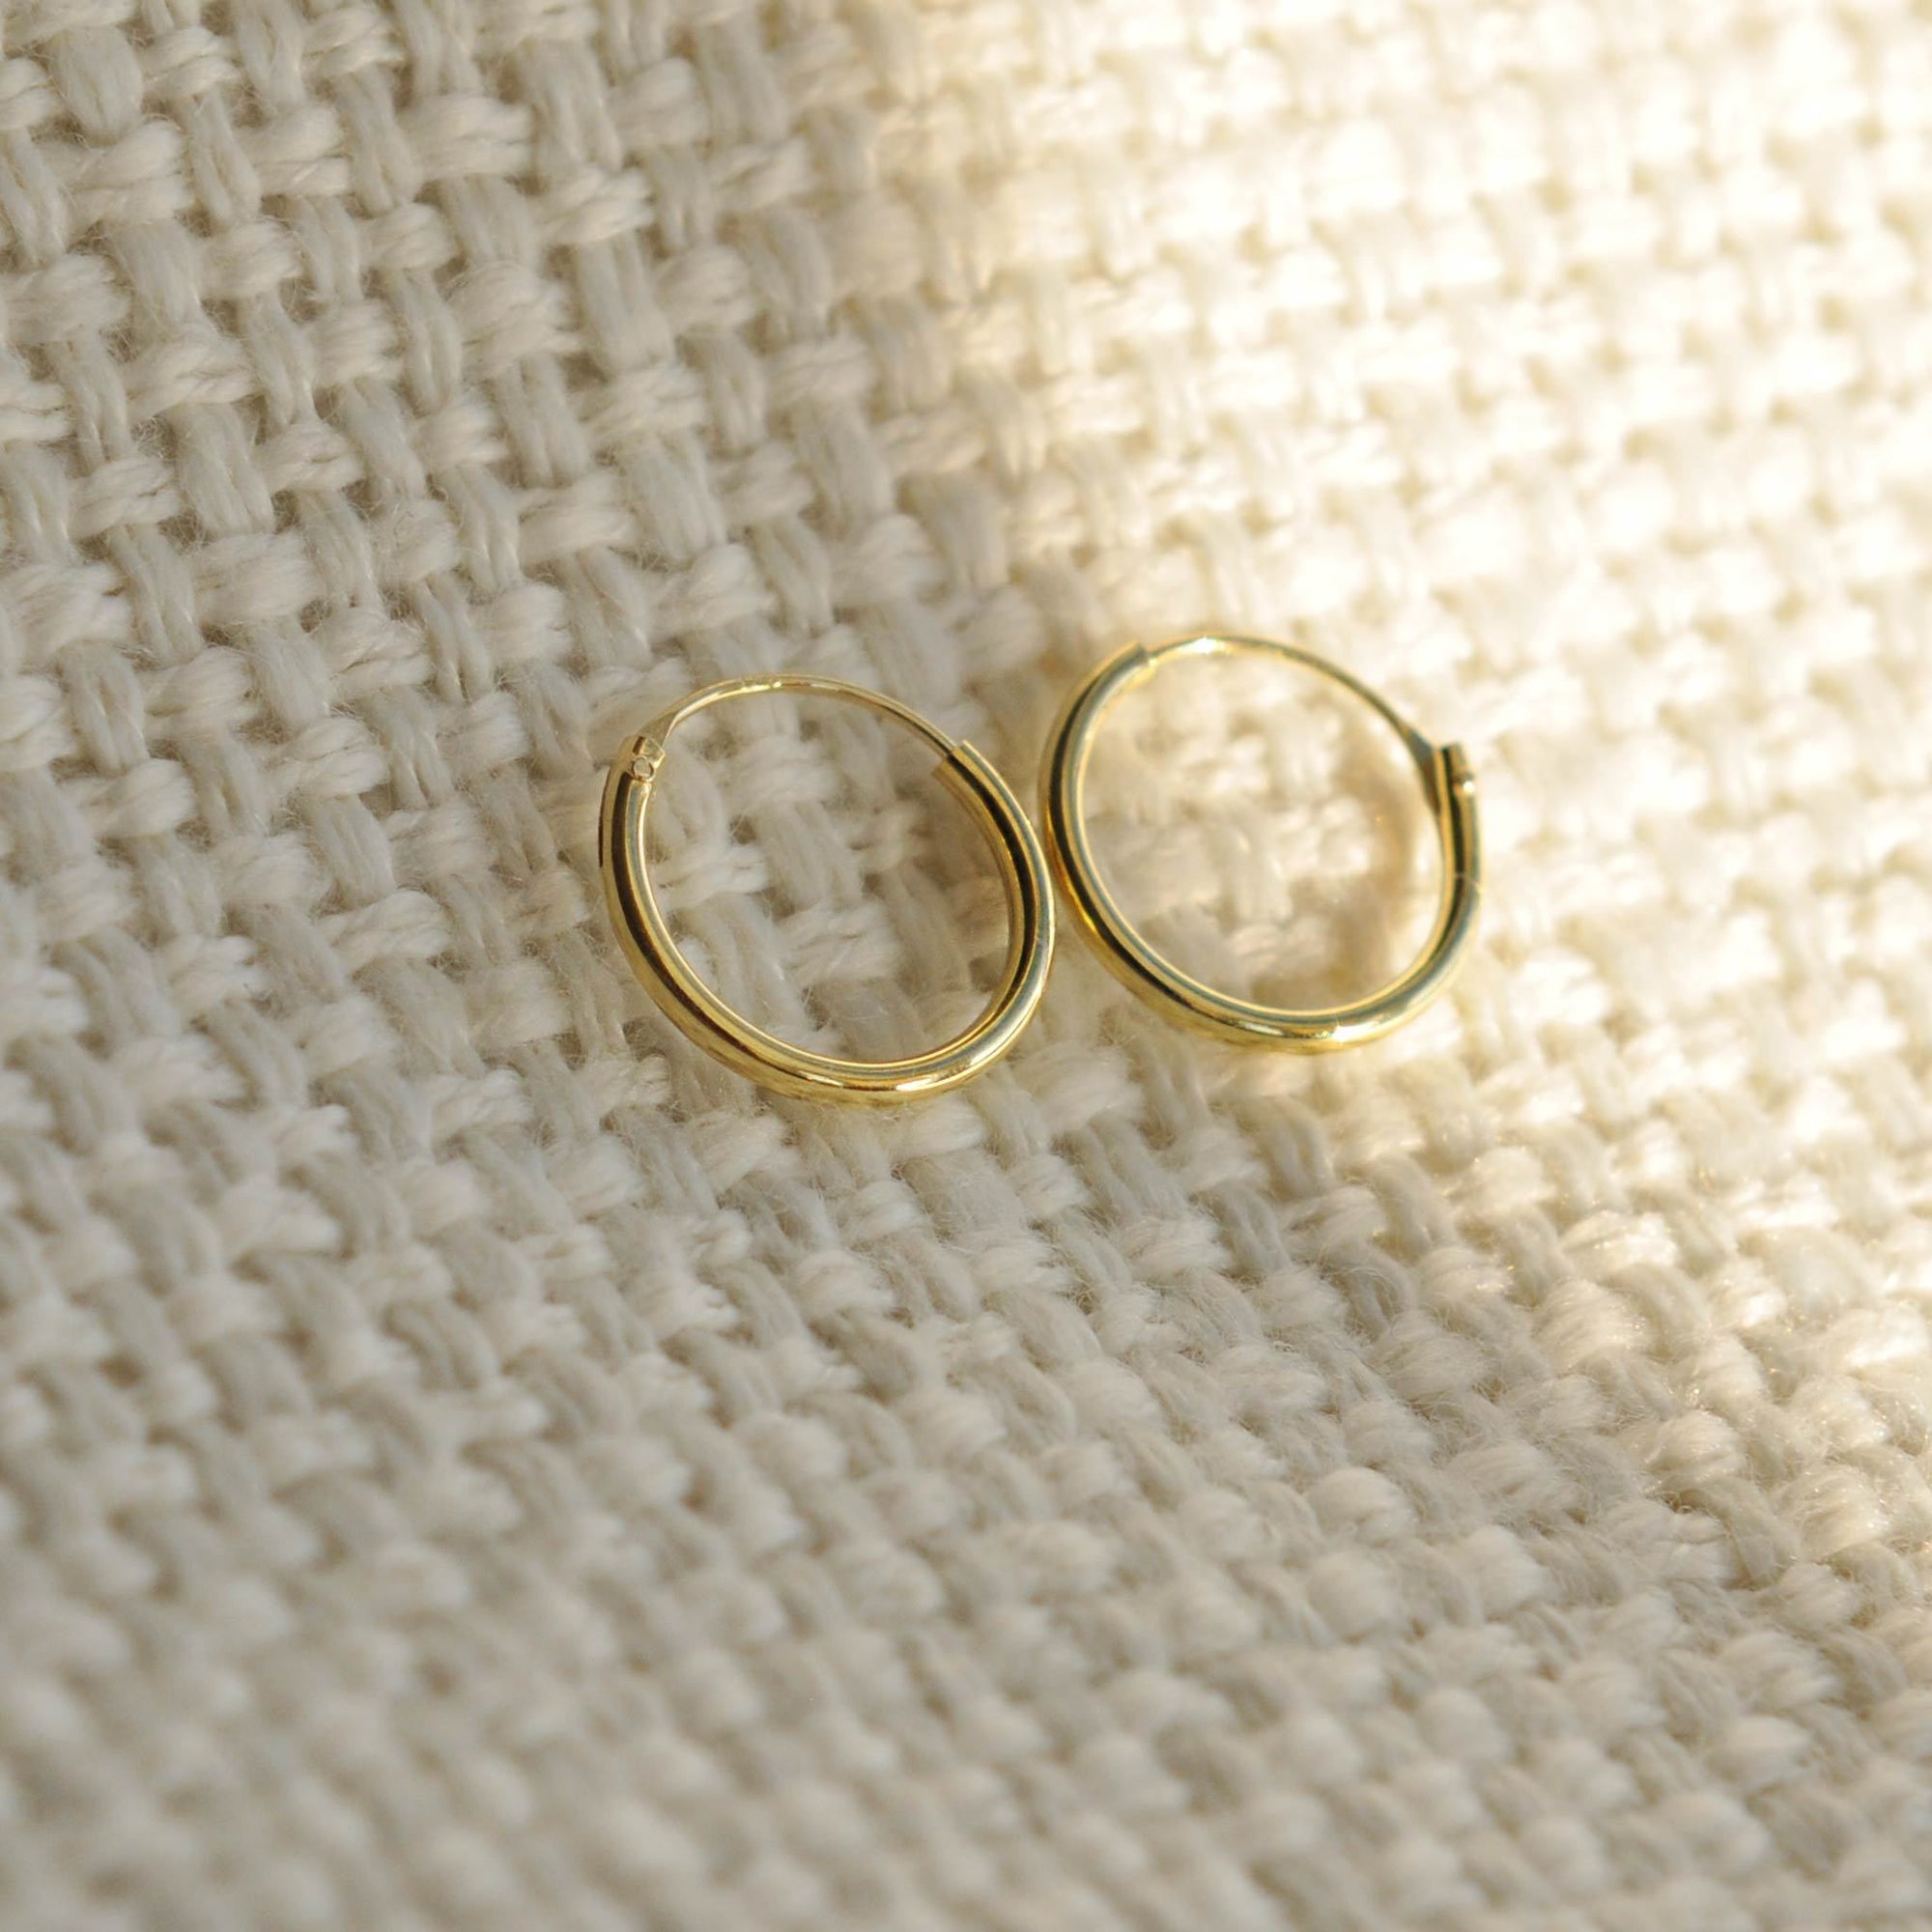 10mm gold huggie earrings